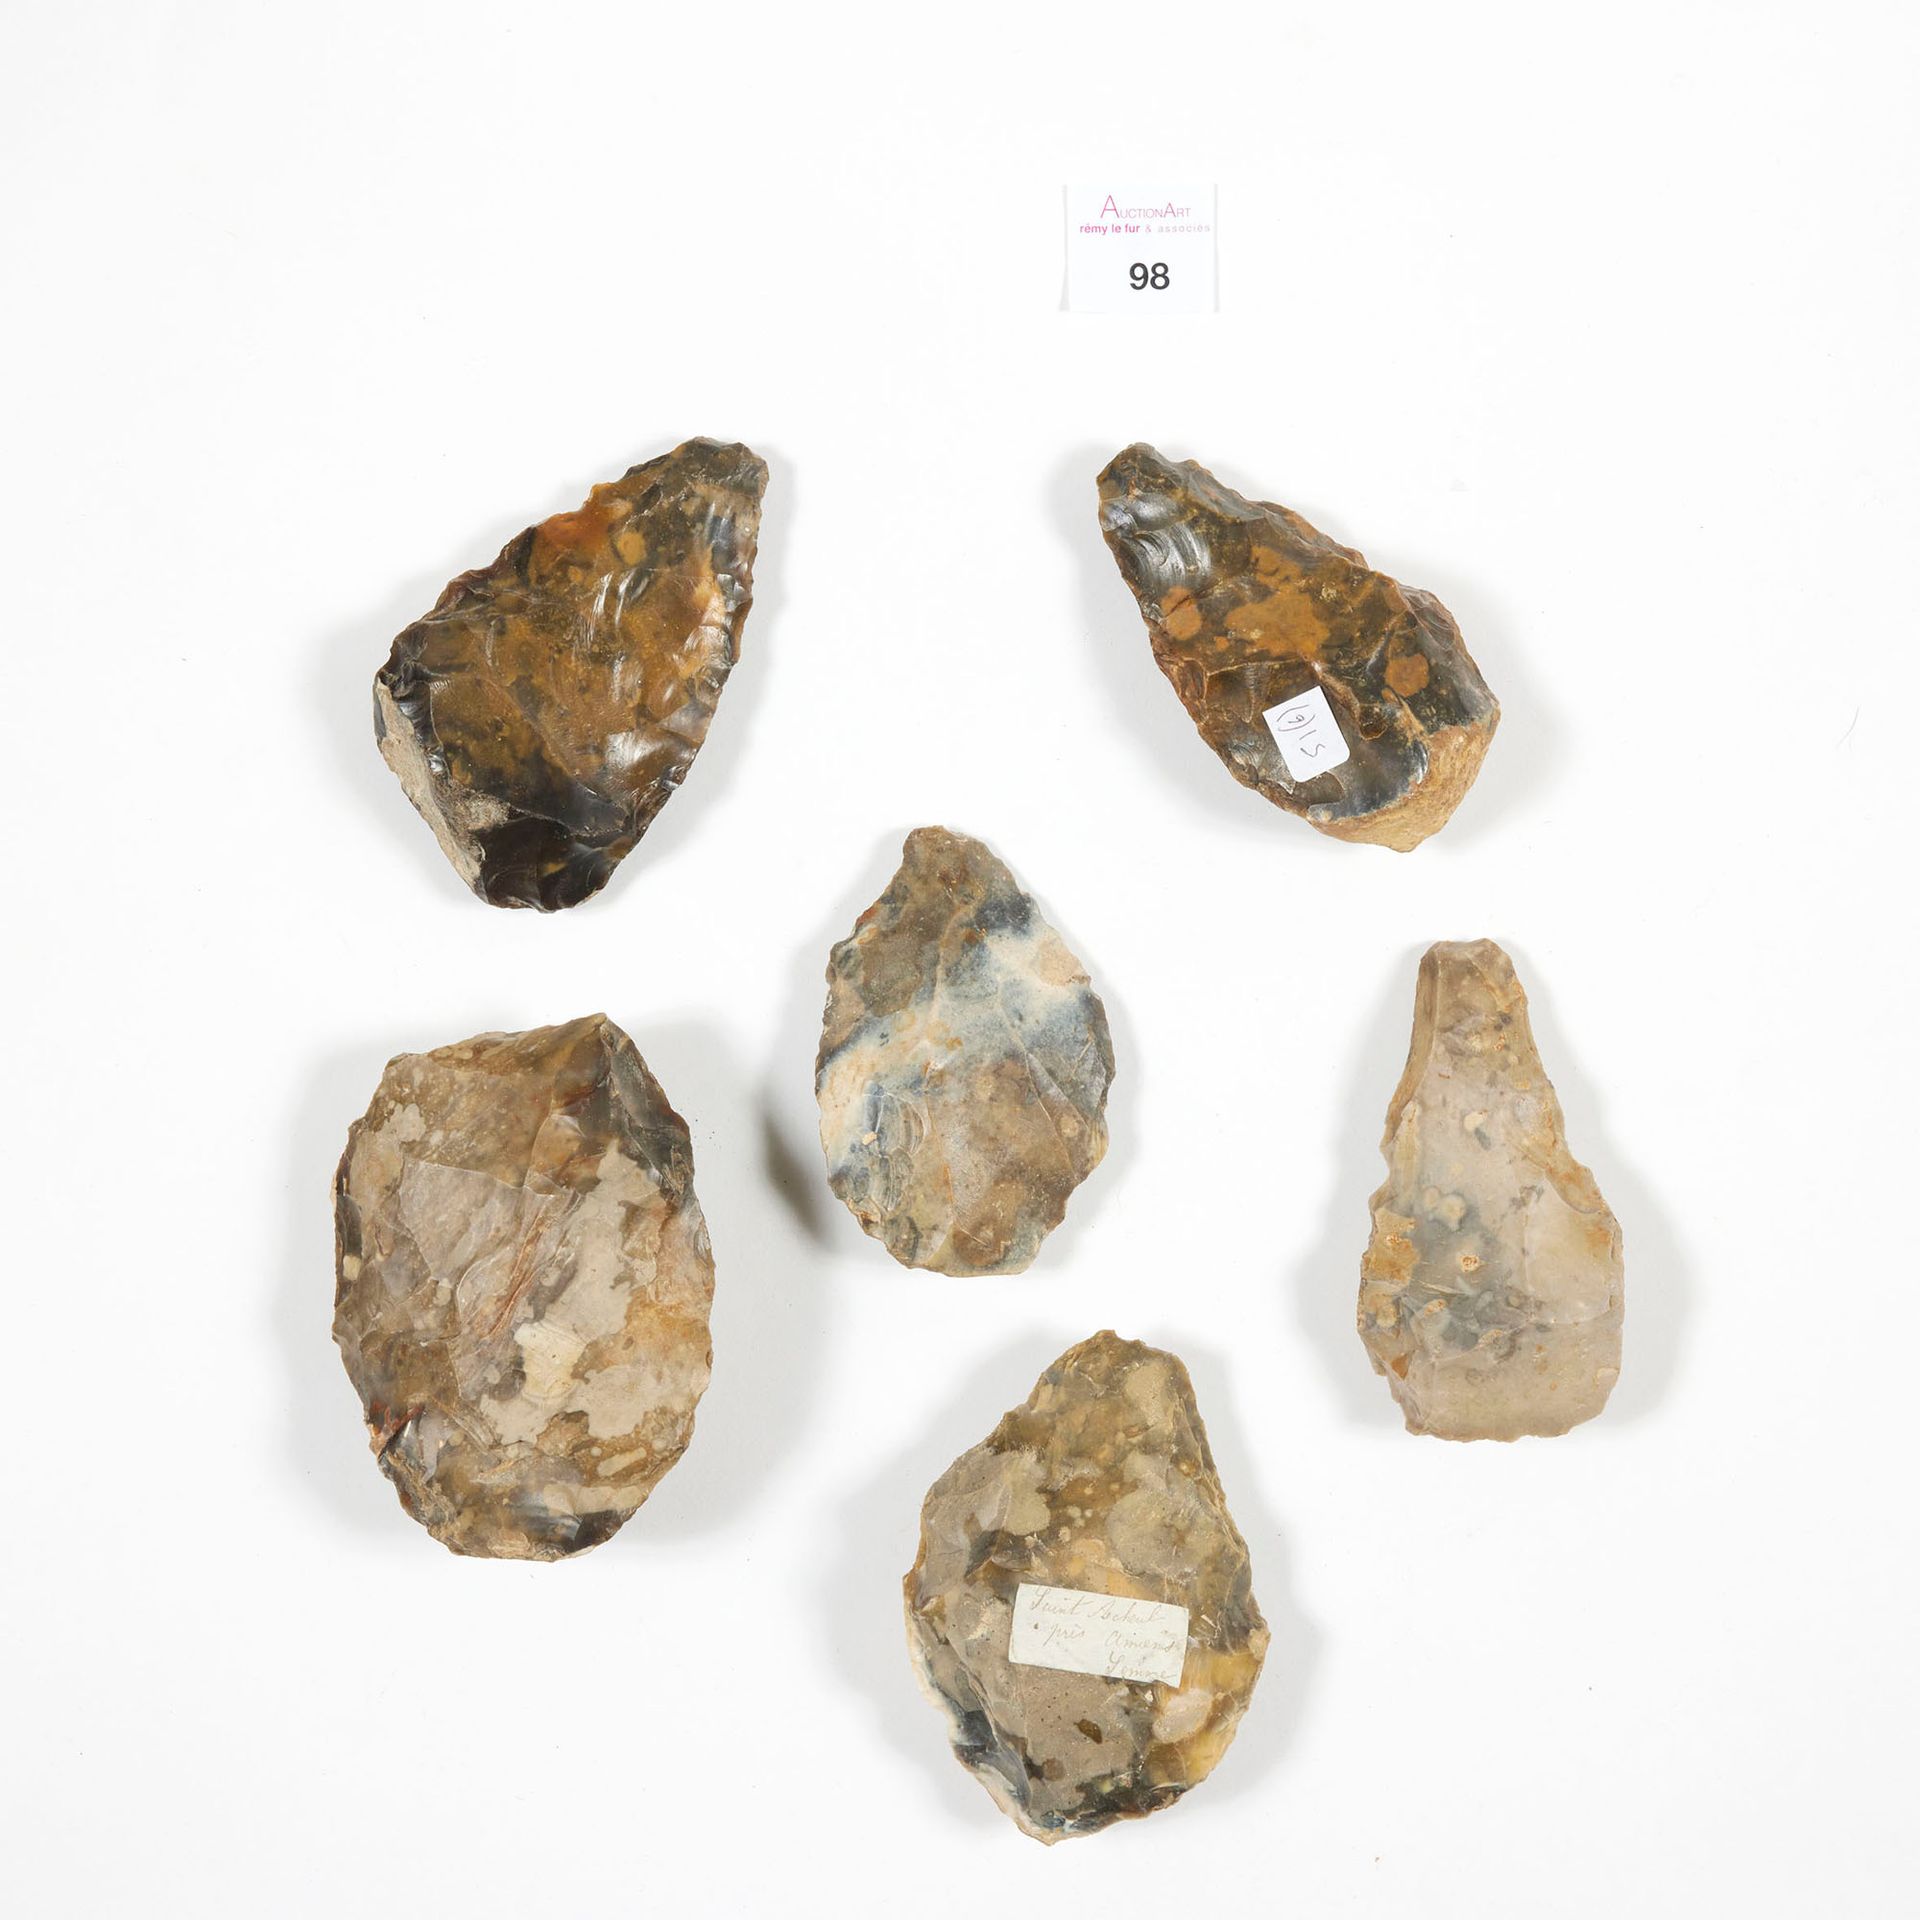 Lot de pièces bifaciales et un éclat Levallois 一套两面体碎片和一个Levallois碎片

灰色和棕色的燧石

&hellip;